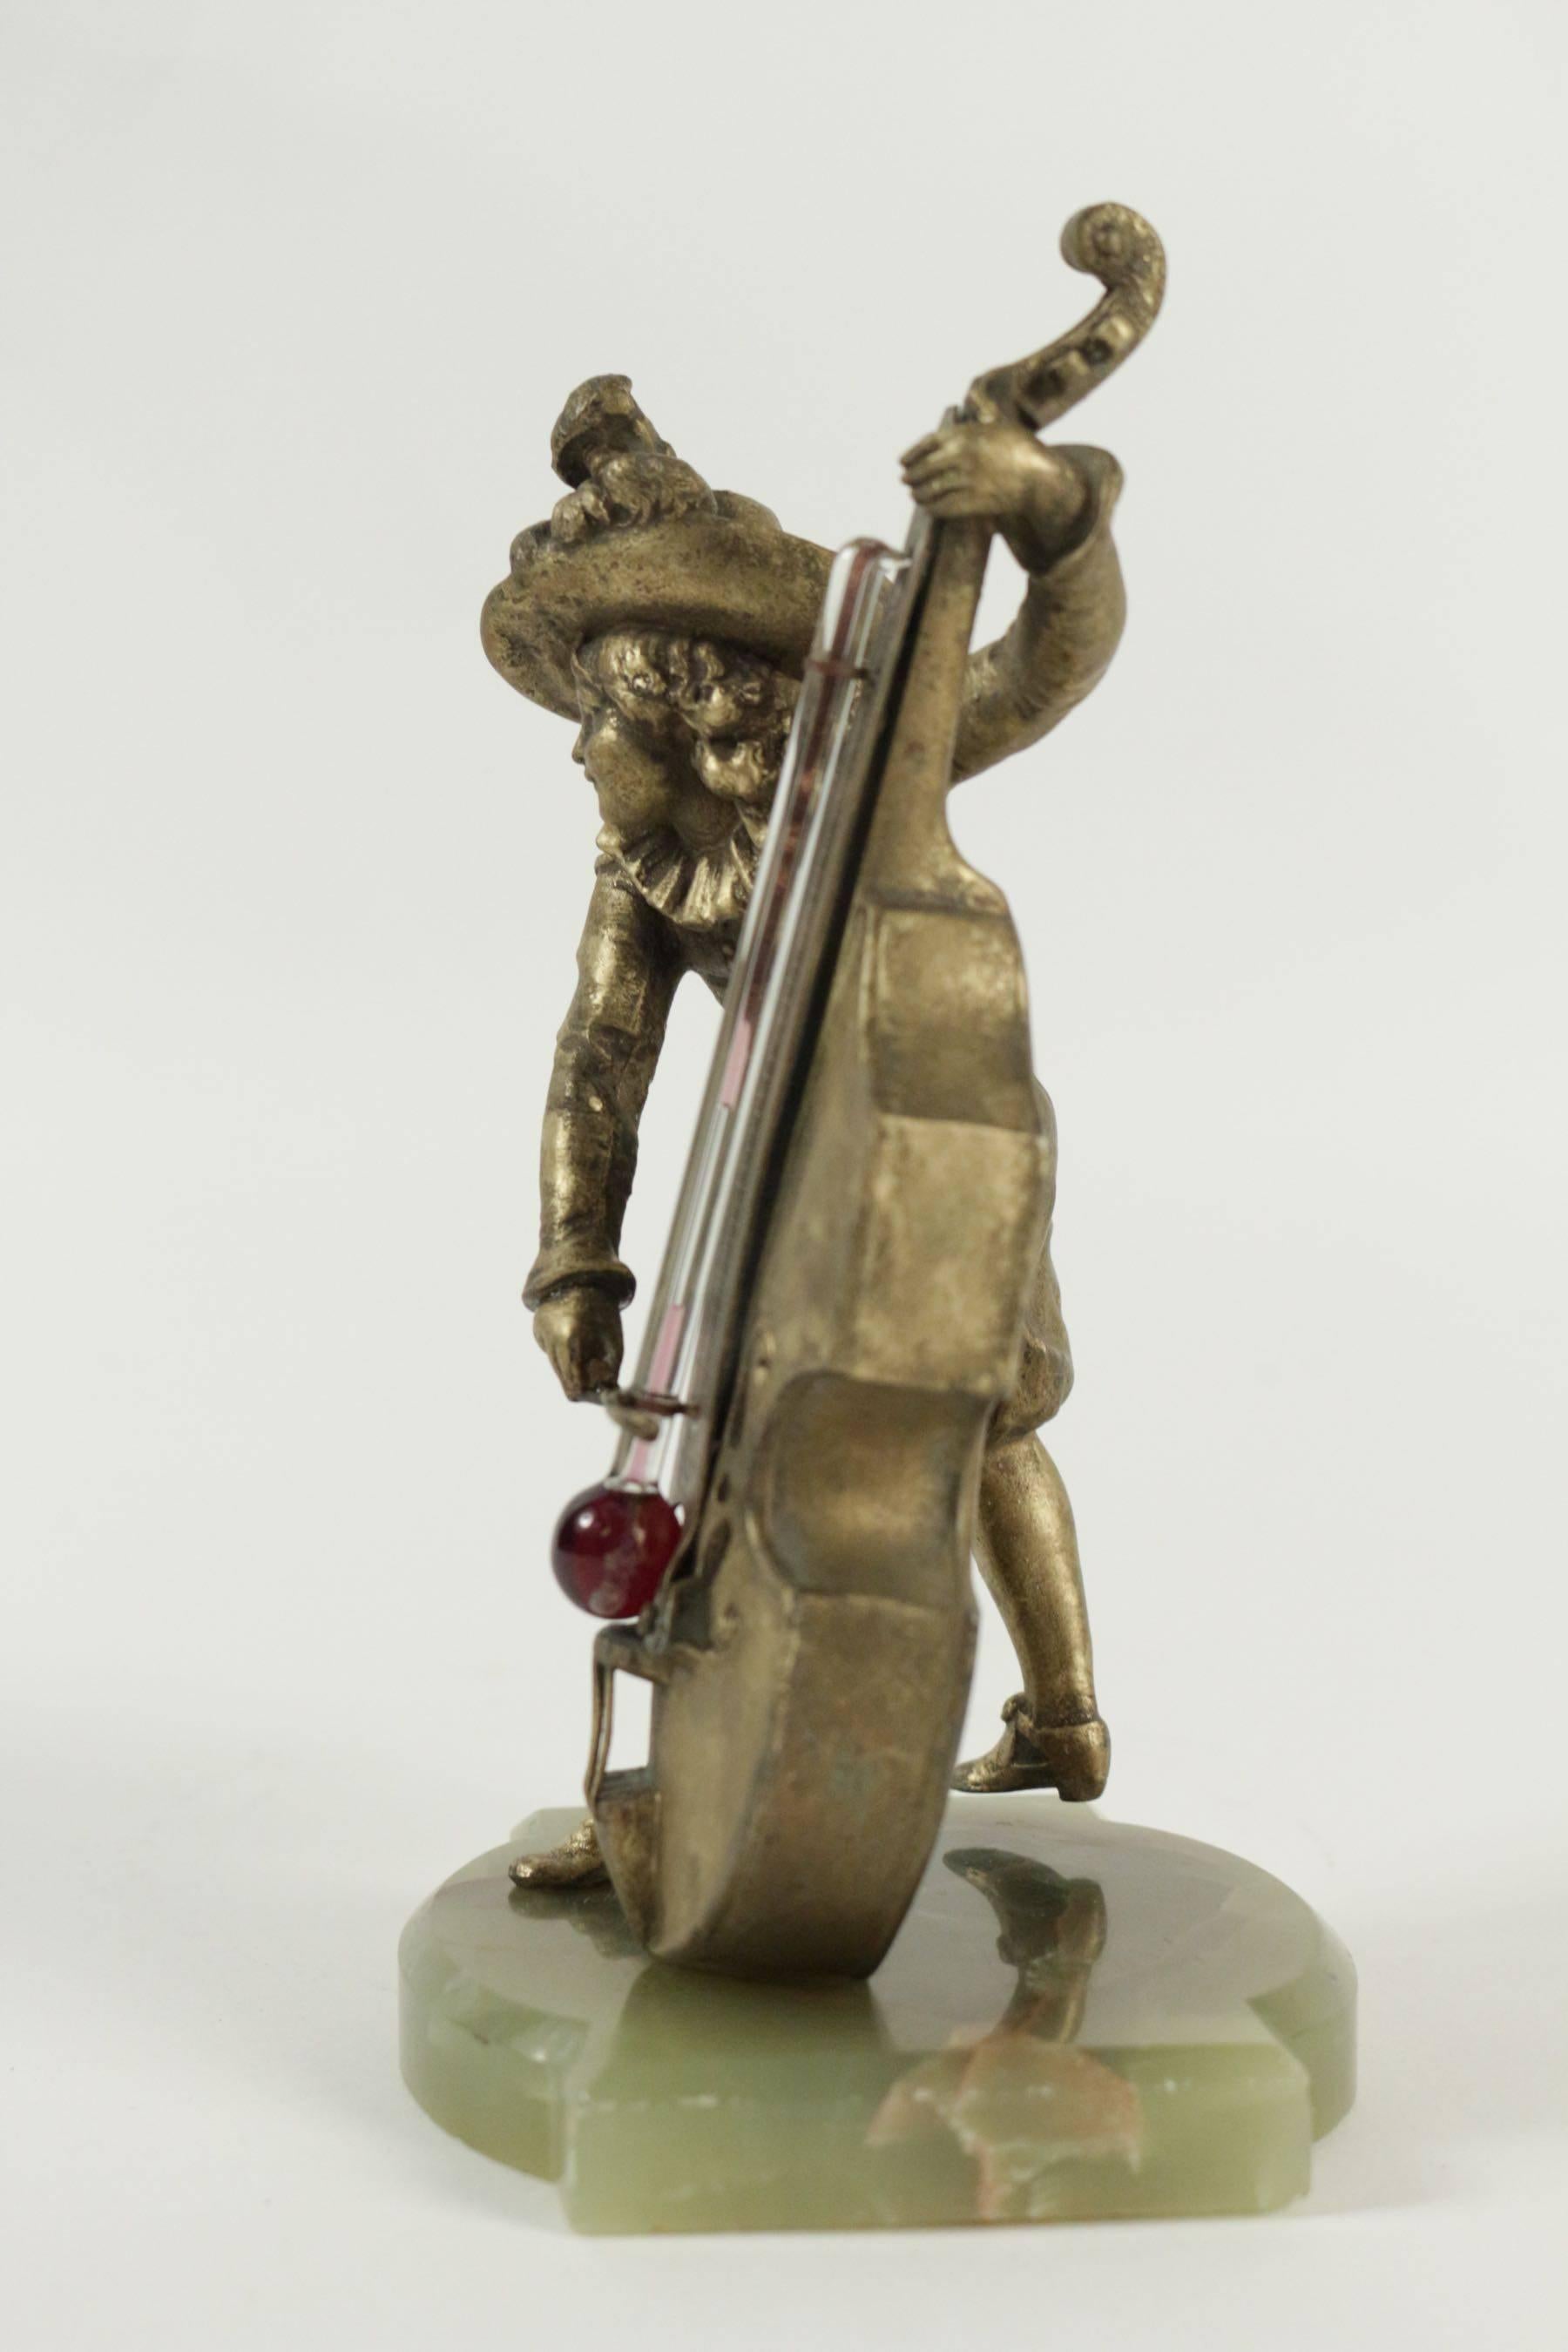 Barometer regulates and base in semi-precious stone representing a Cello player in antique. Measures: H 20cm, W 10cm.